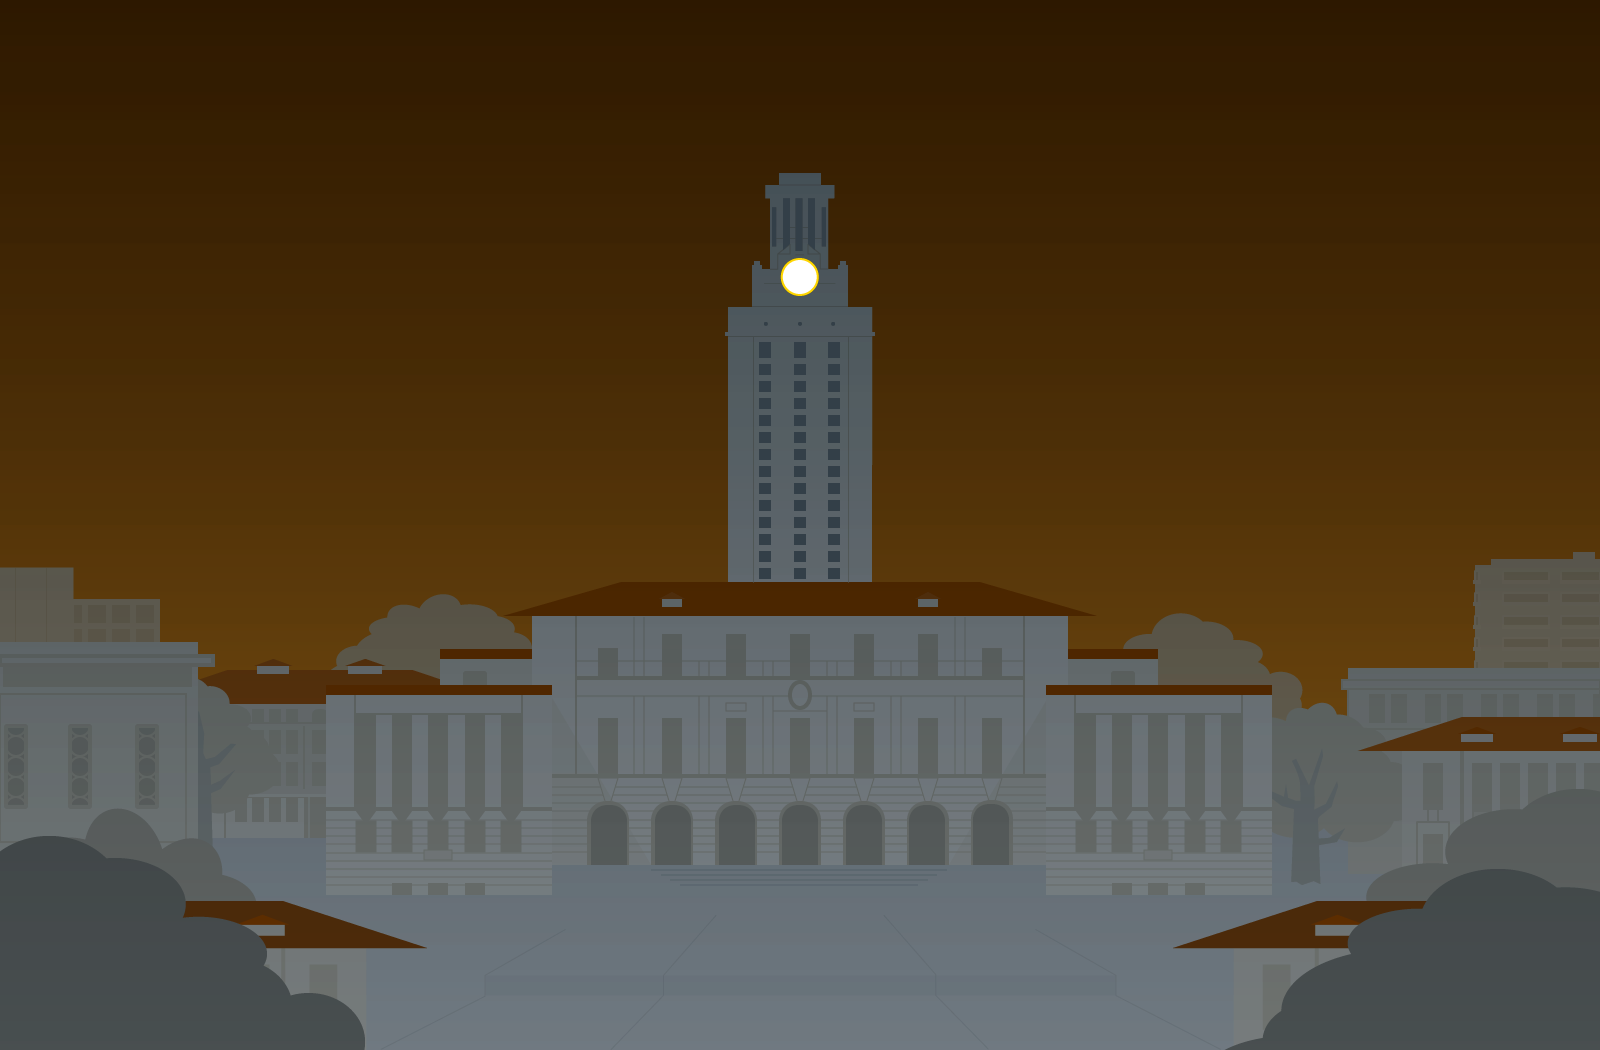 Tower illustration of Dark lighting configuration